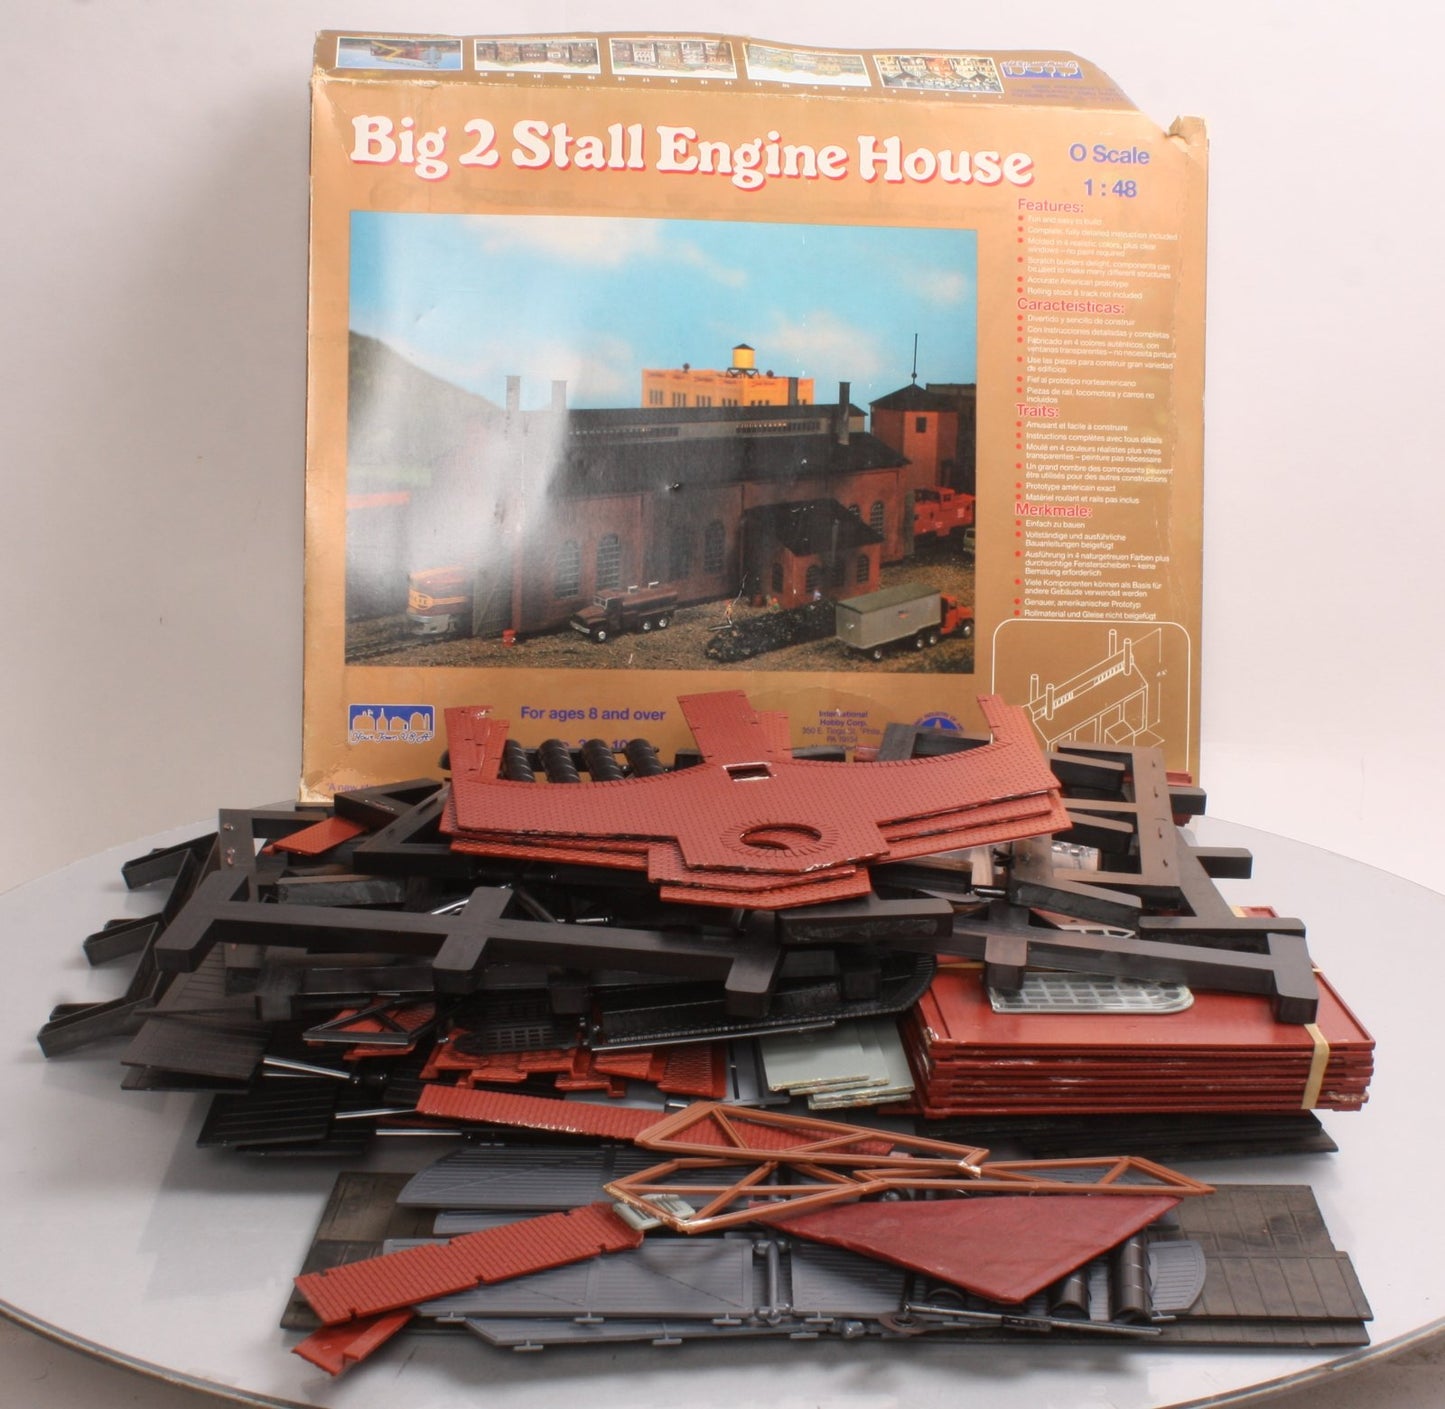 IHC 300-100 O Scale Big 2 Stall Engine House Building Kit